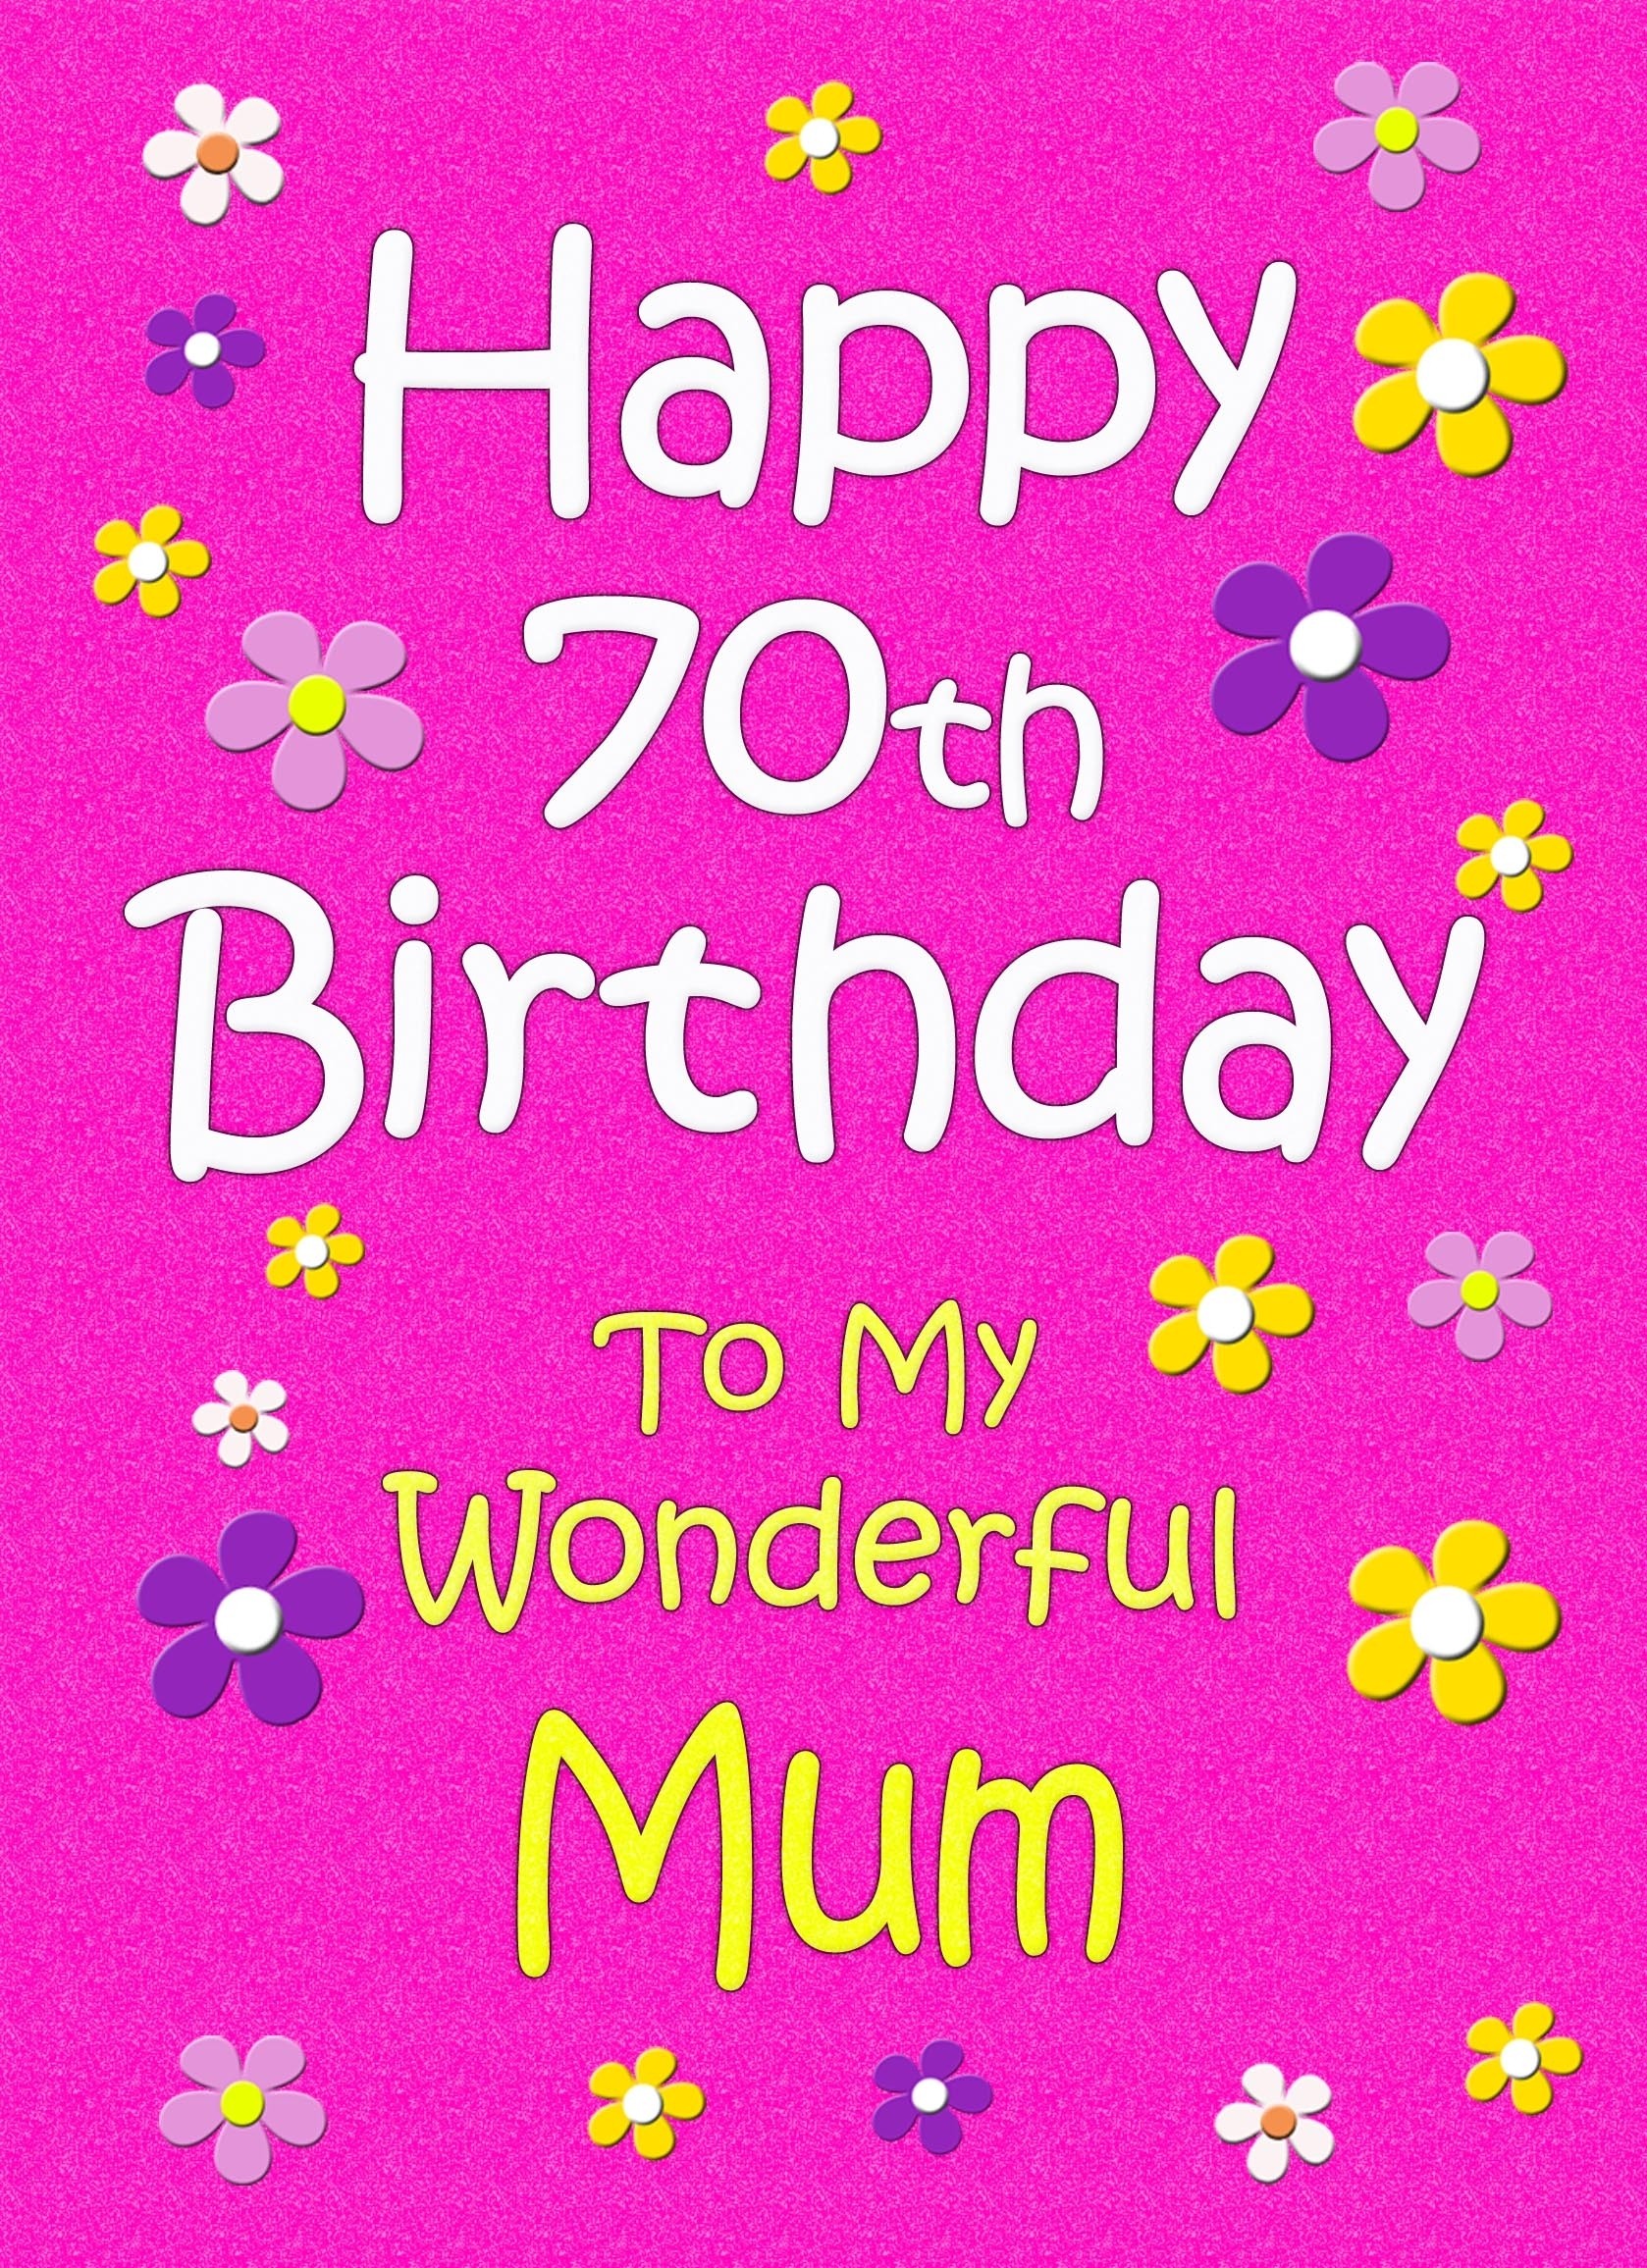 Mum 70th Birthday Card (Pink)